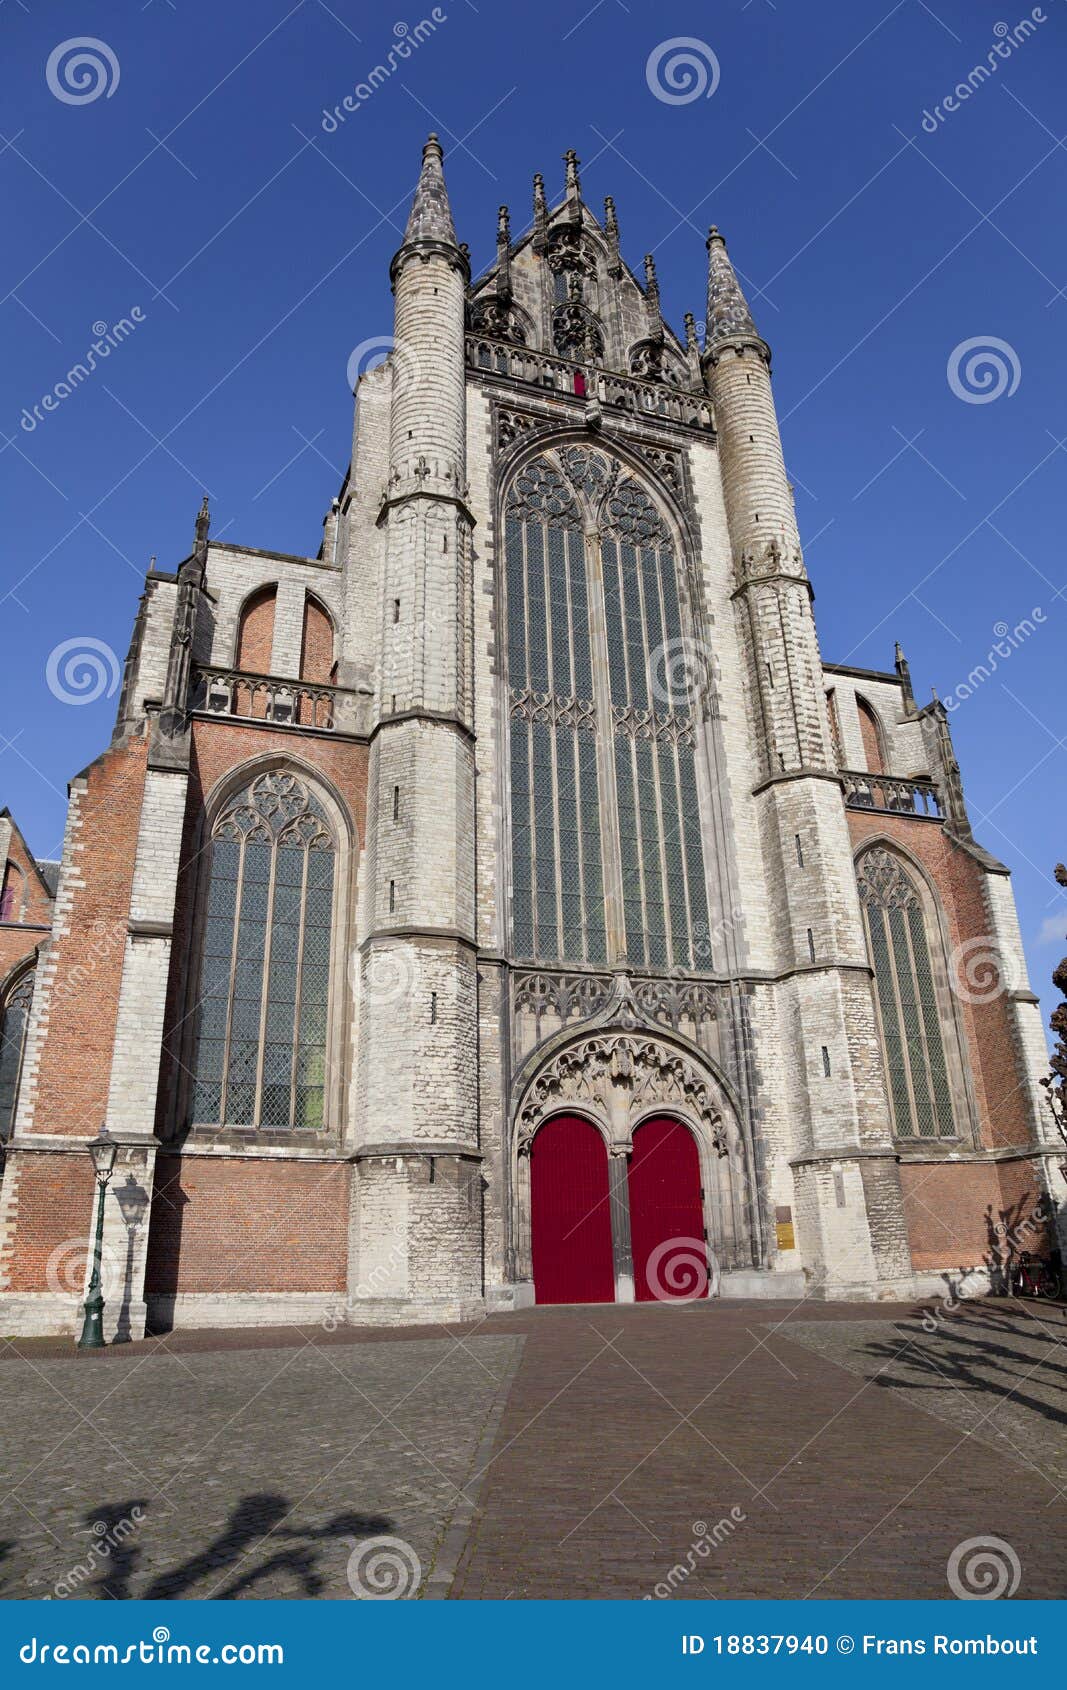 church building in city of leiden,